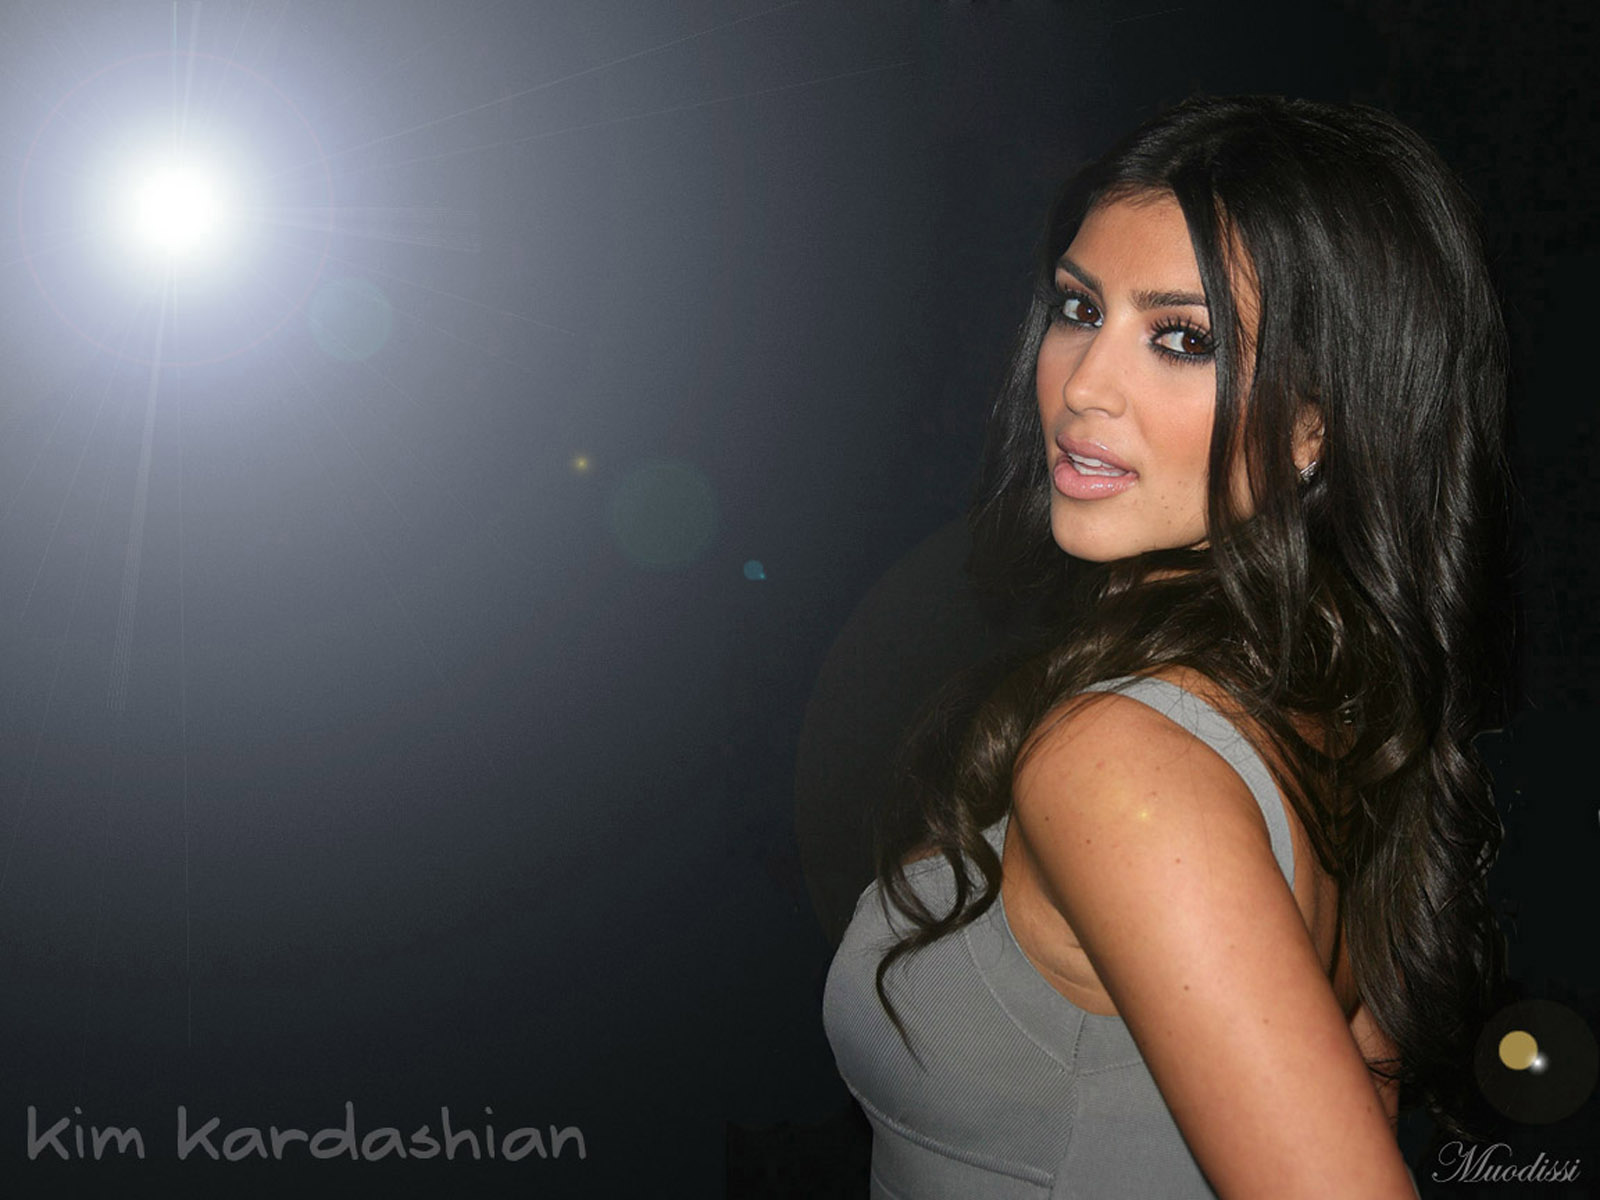 http://4.bp.blogspot.com/-L4eRX-1nh3c/Tanv31elLGI/AAAAAAAAAOk/AO7tujnN-EU/s1600/kim-kardashian.jpg